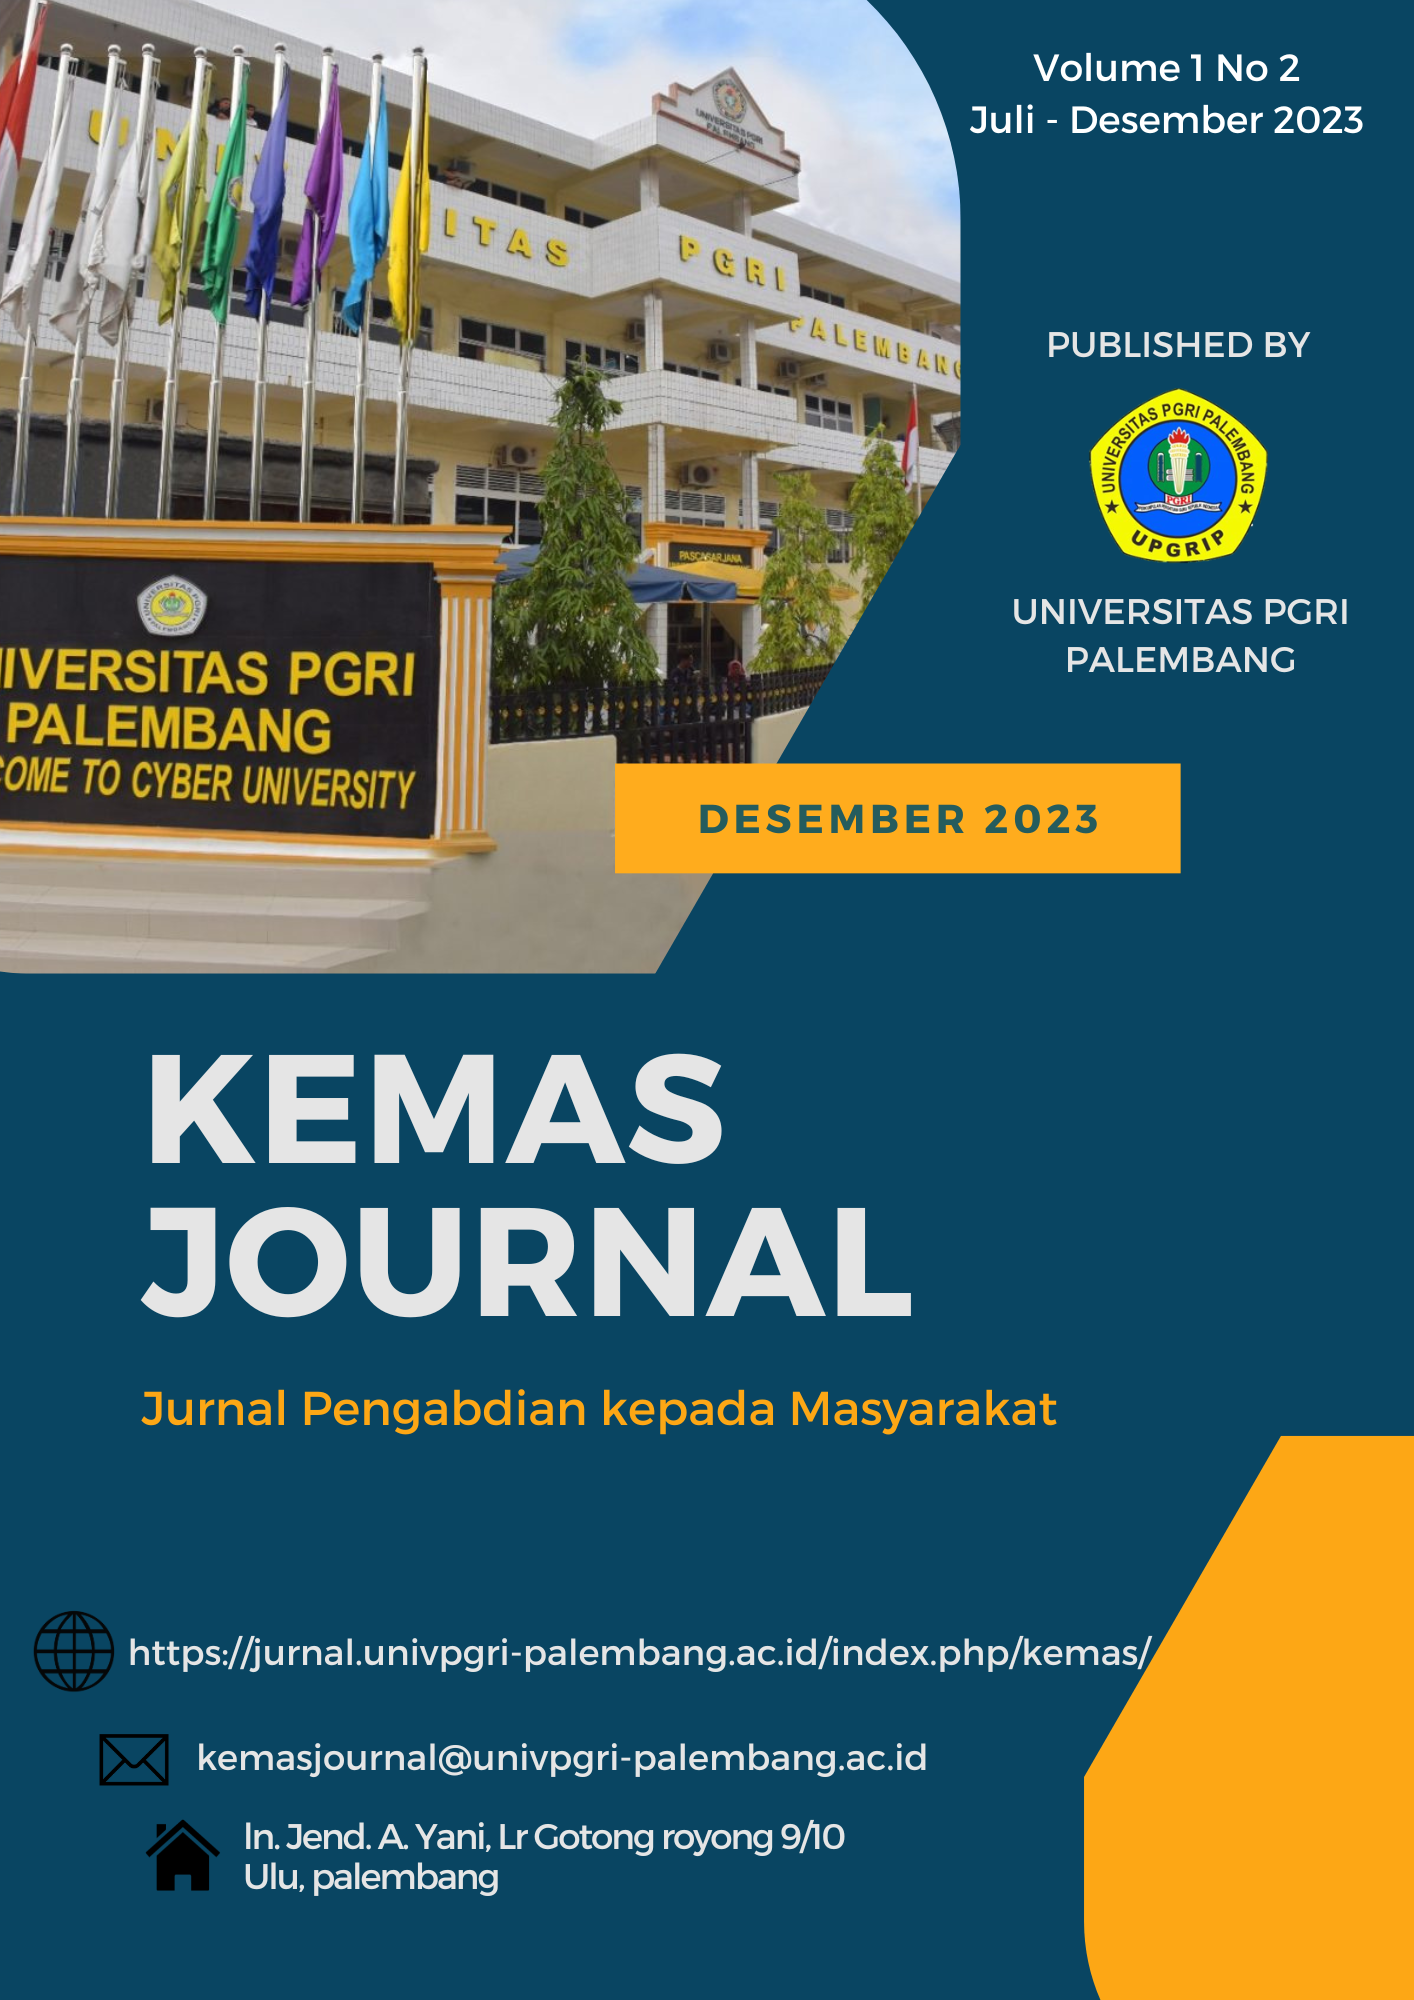 					View Vol. 1 No. 2 (2023): Kemas Journal - July - December
				